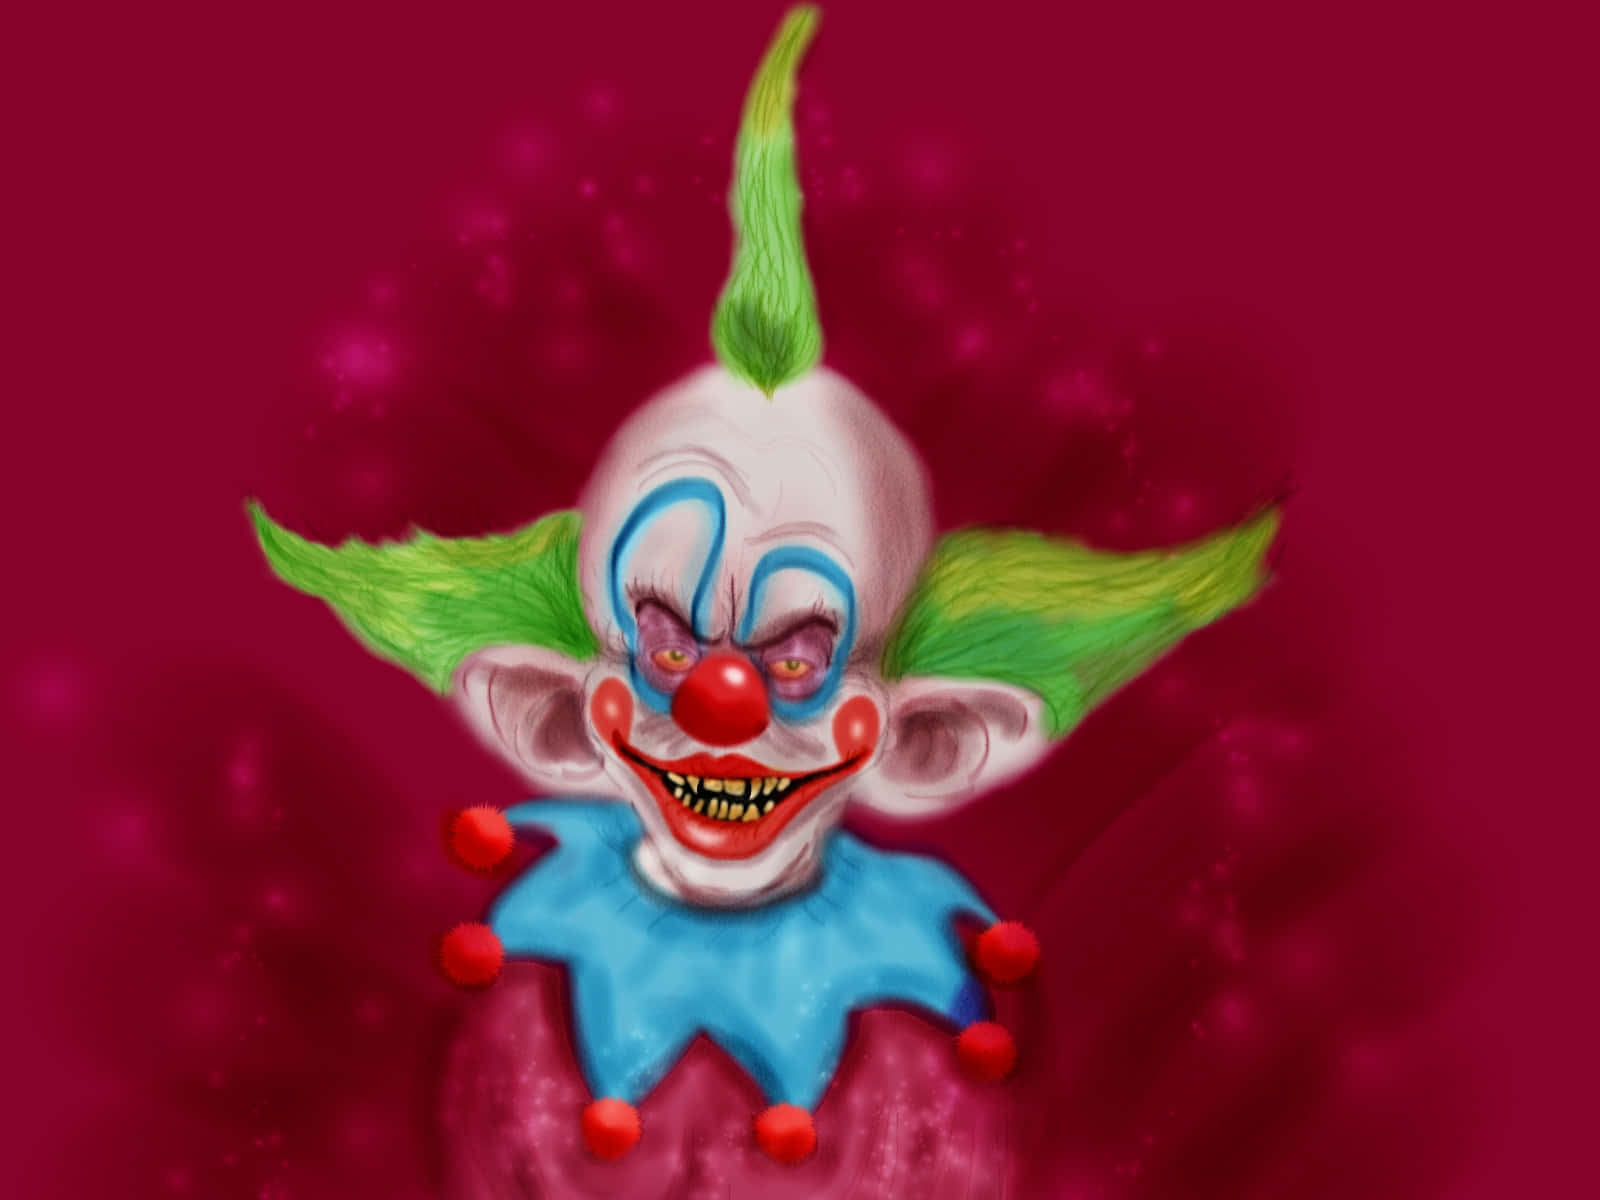 Hastdu Killer Klowns From Outer Space Erlebt? Wallpaper